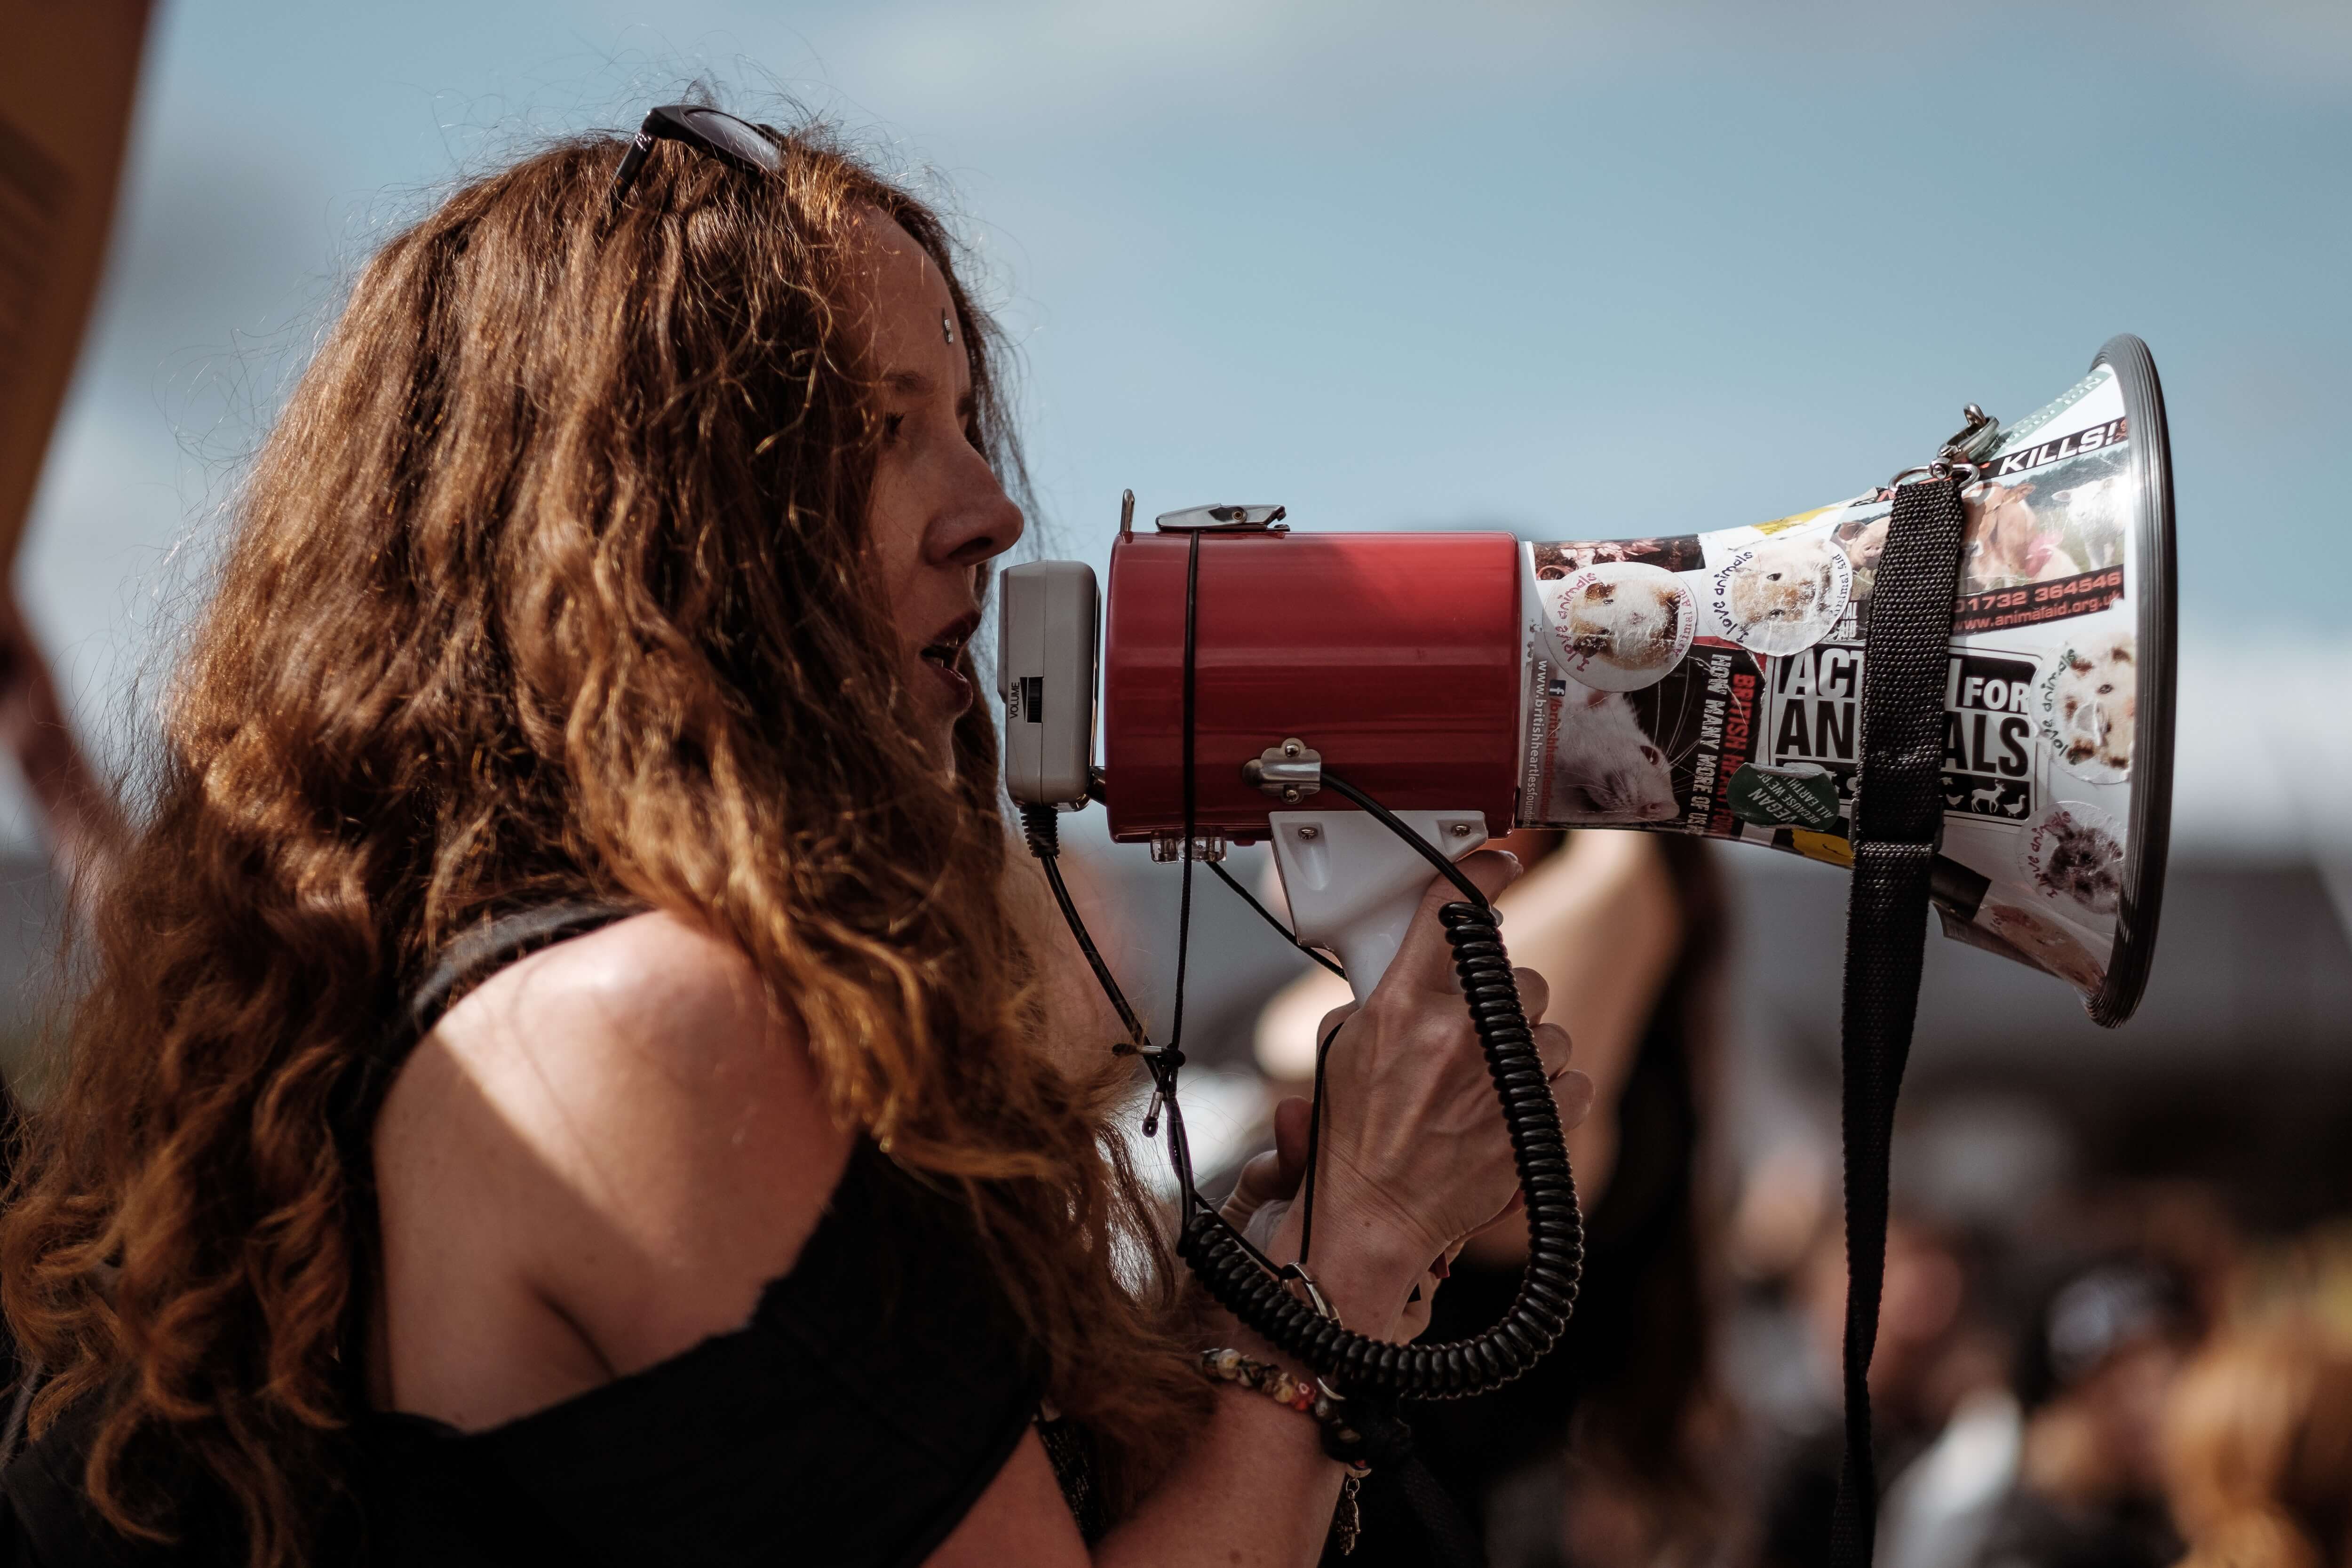 A woman shouting into a megaphone